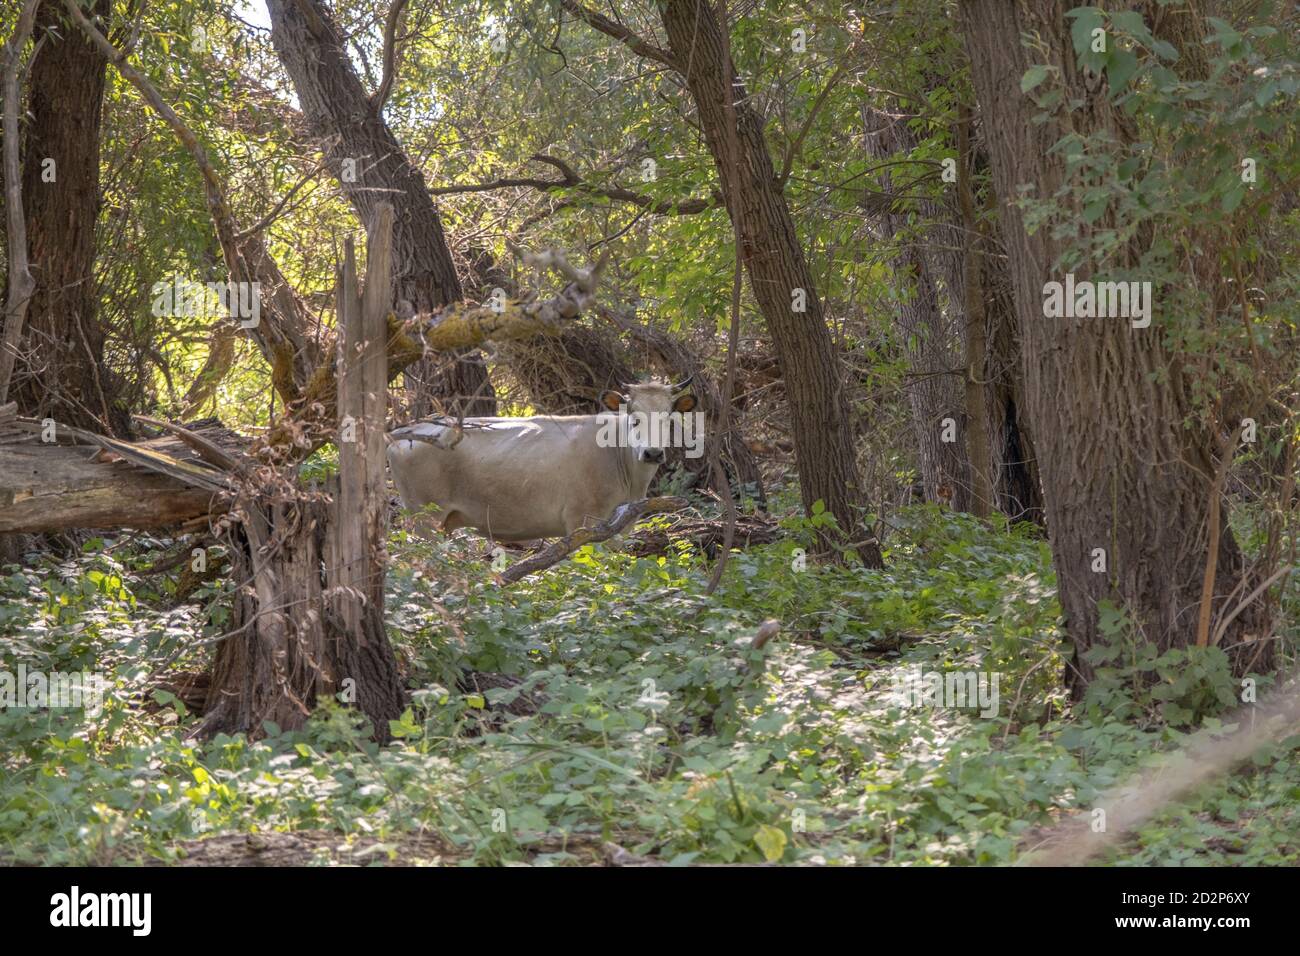 Wild Ukrainian gray cattle hiding in forest on Tataru island. Tataru island, Chilia branch Danube Delta, Izmail, Odessa Oblast. Ukraine Stock Photo